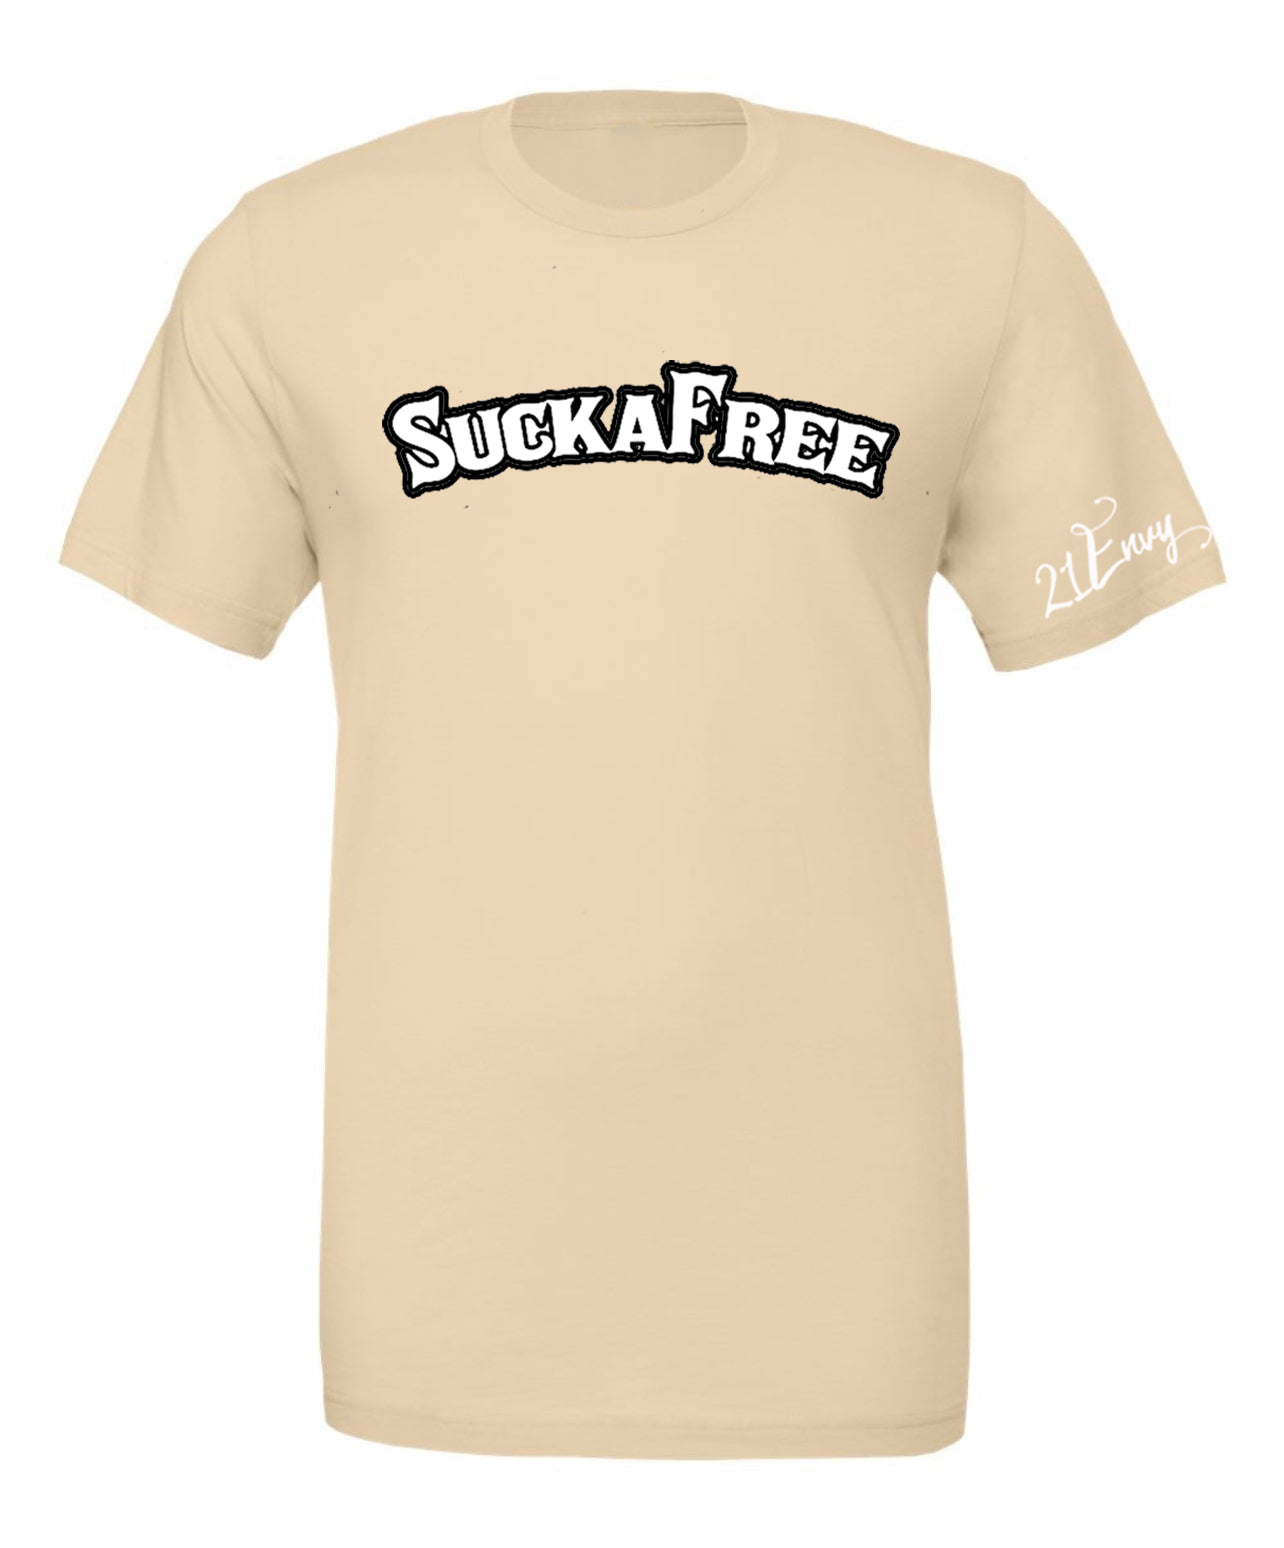 Sucka Free T-shirt